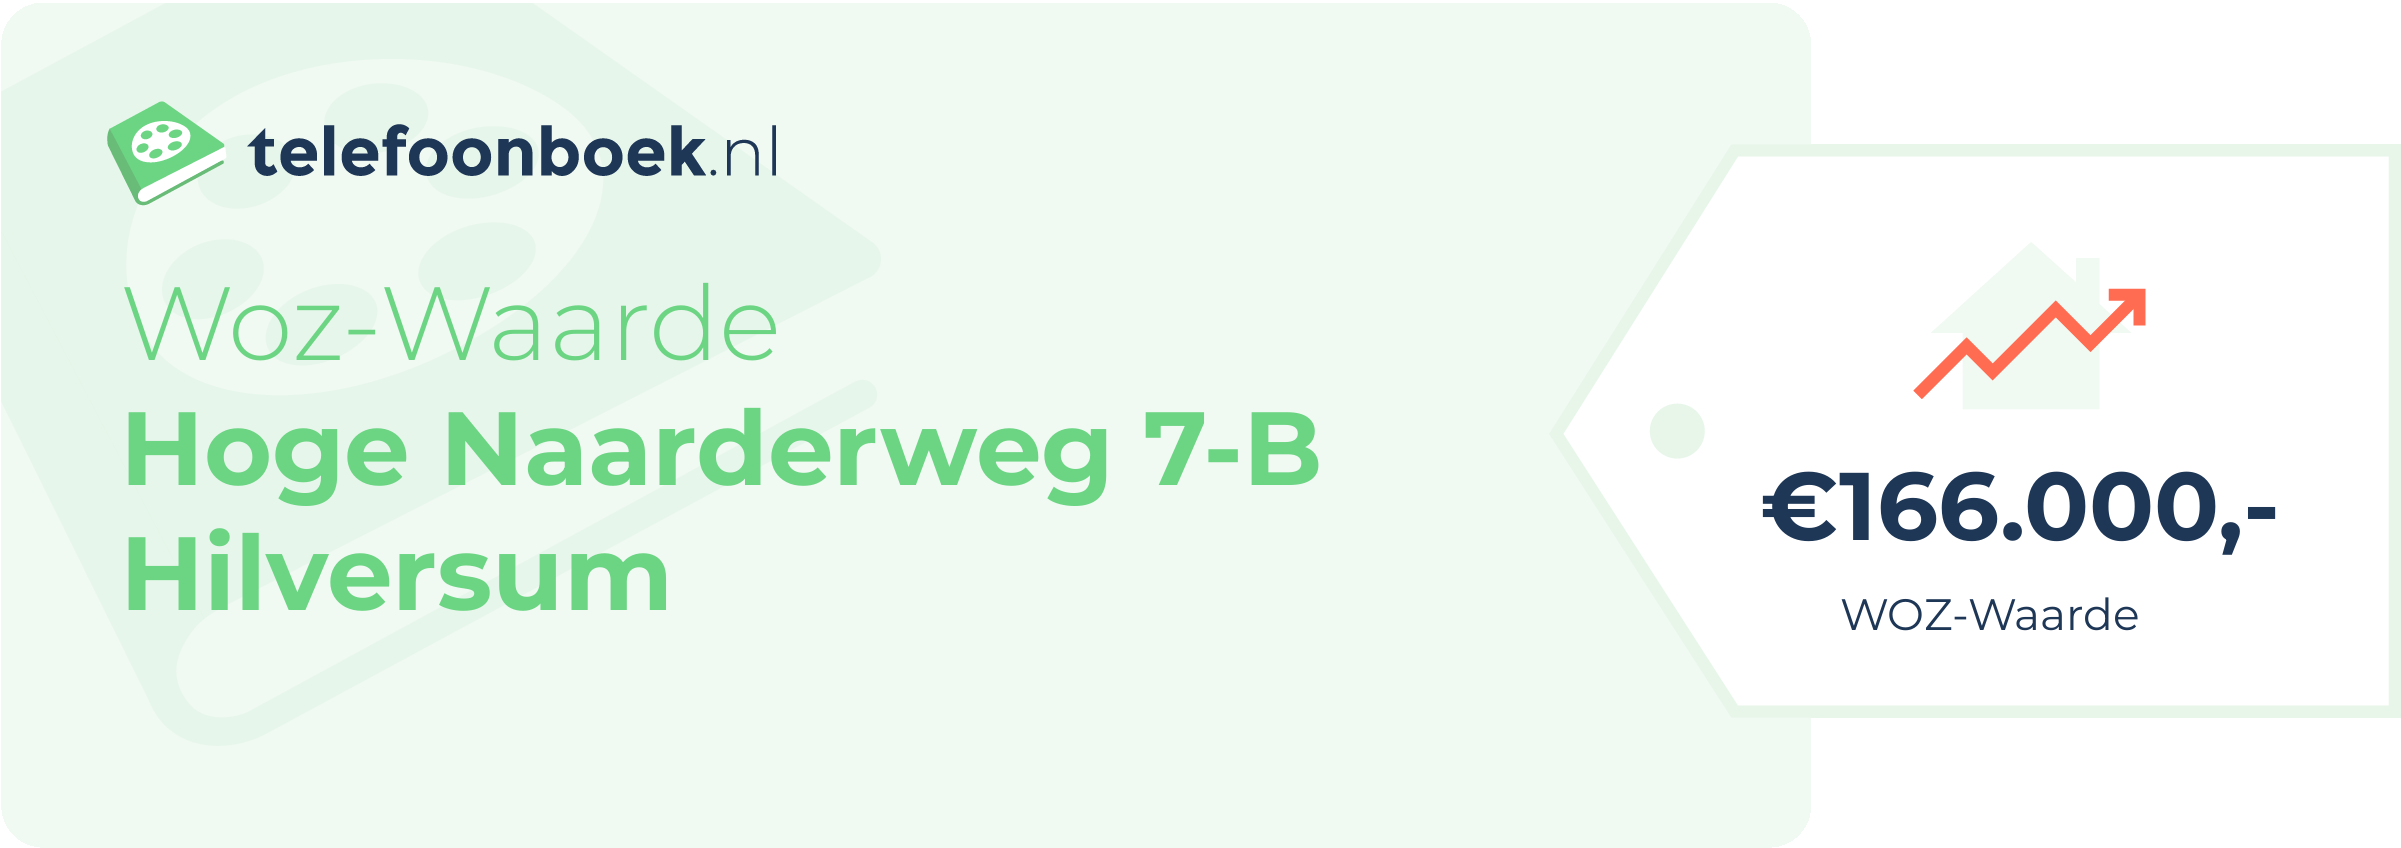 WOZ-waarde Hoge Naarderweg 7-B Hilversum